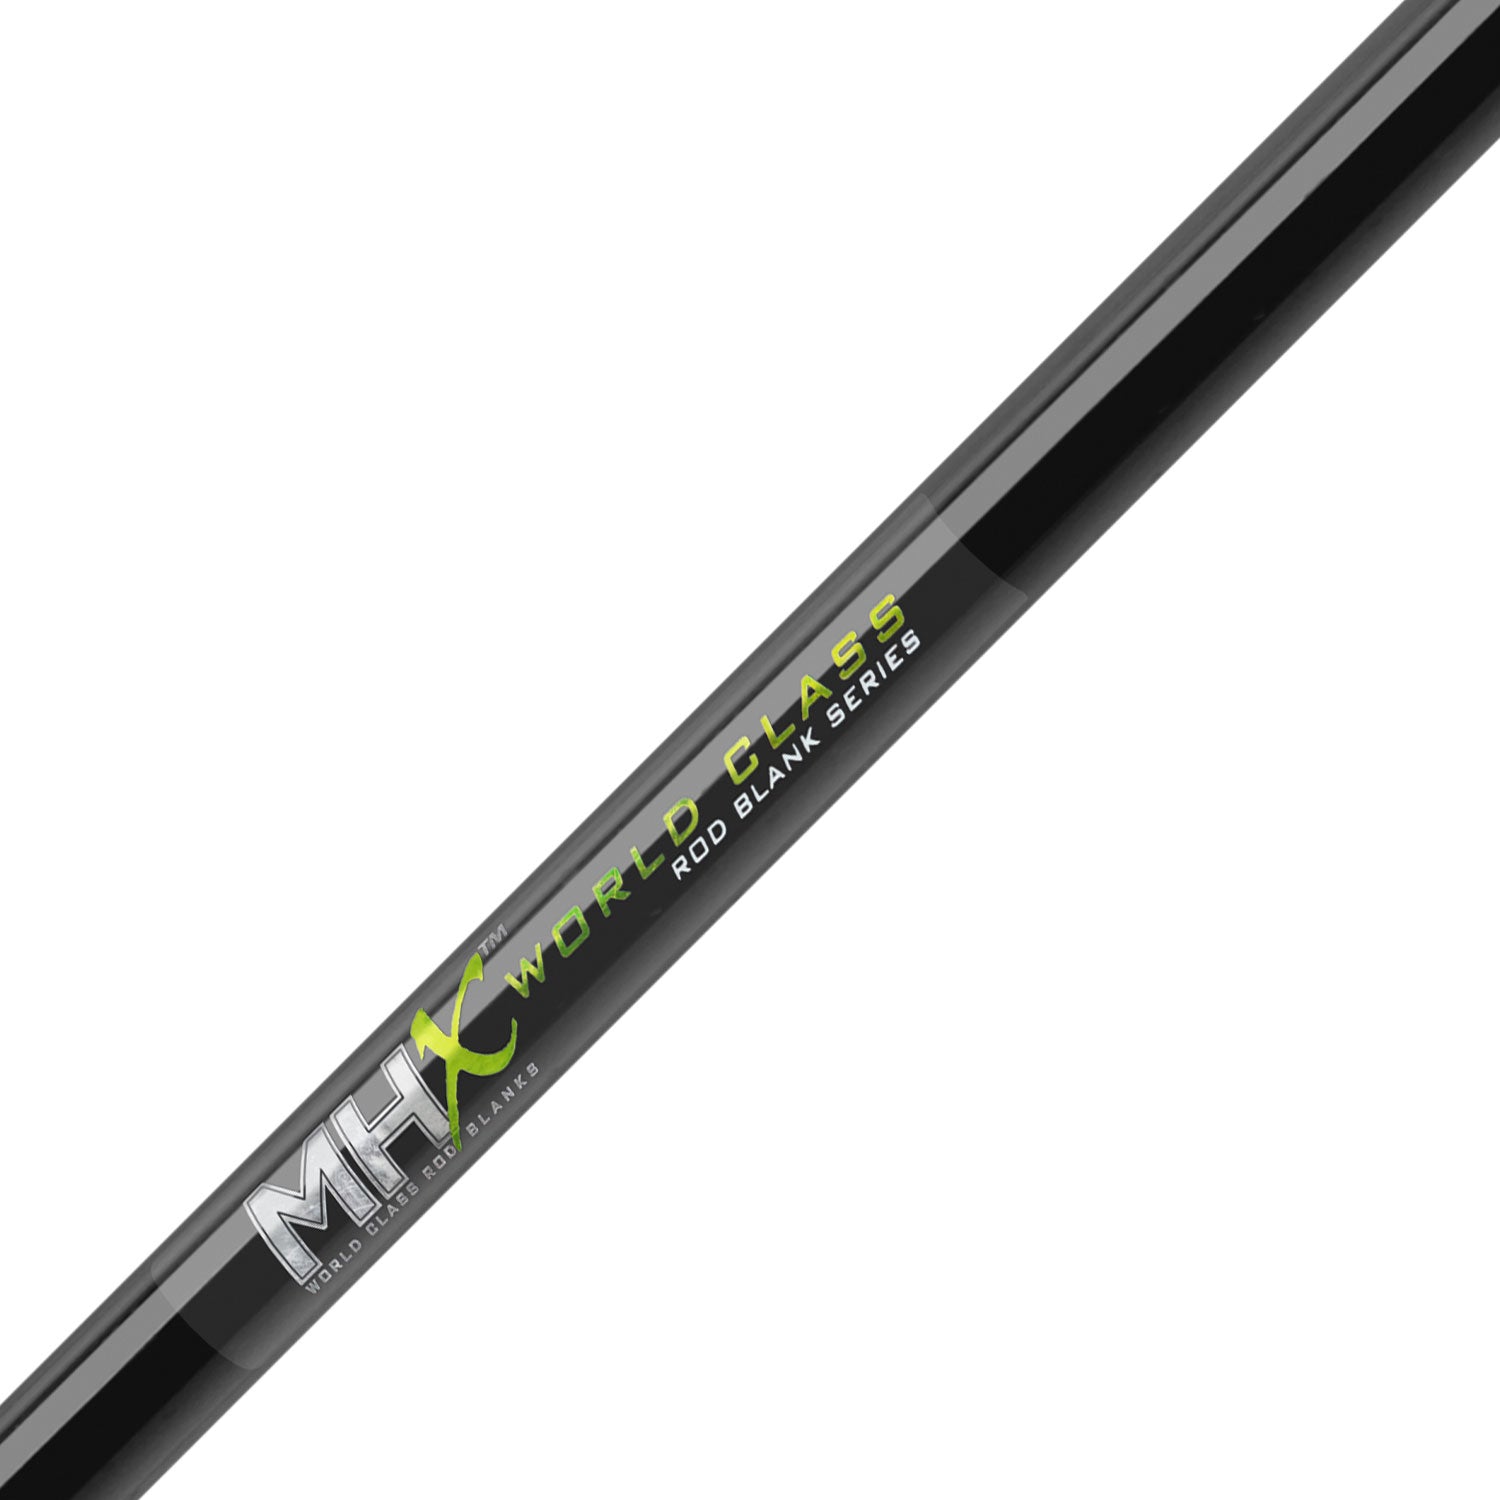 MHX 7'6 Medium Light Saltwater Rod Blank - L903-MHX